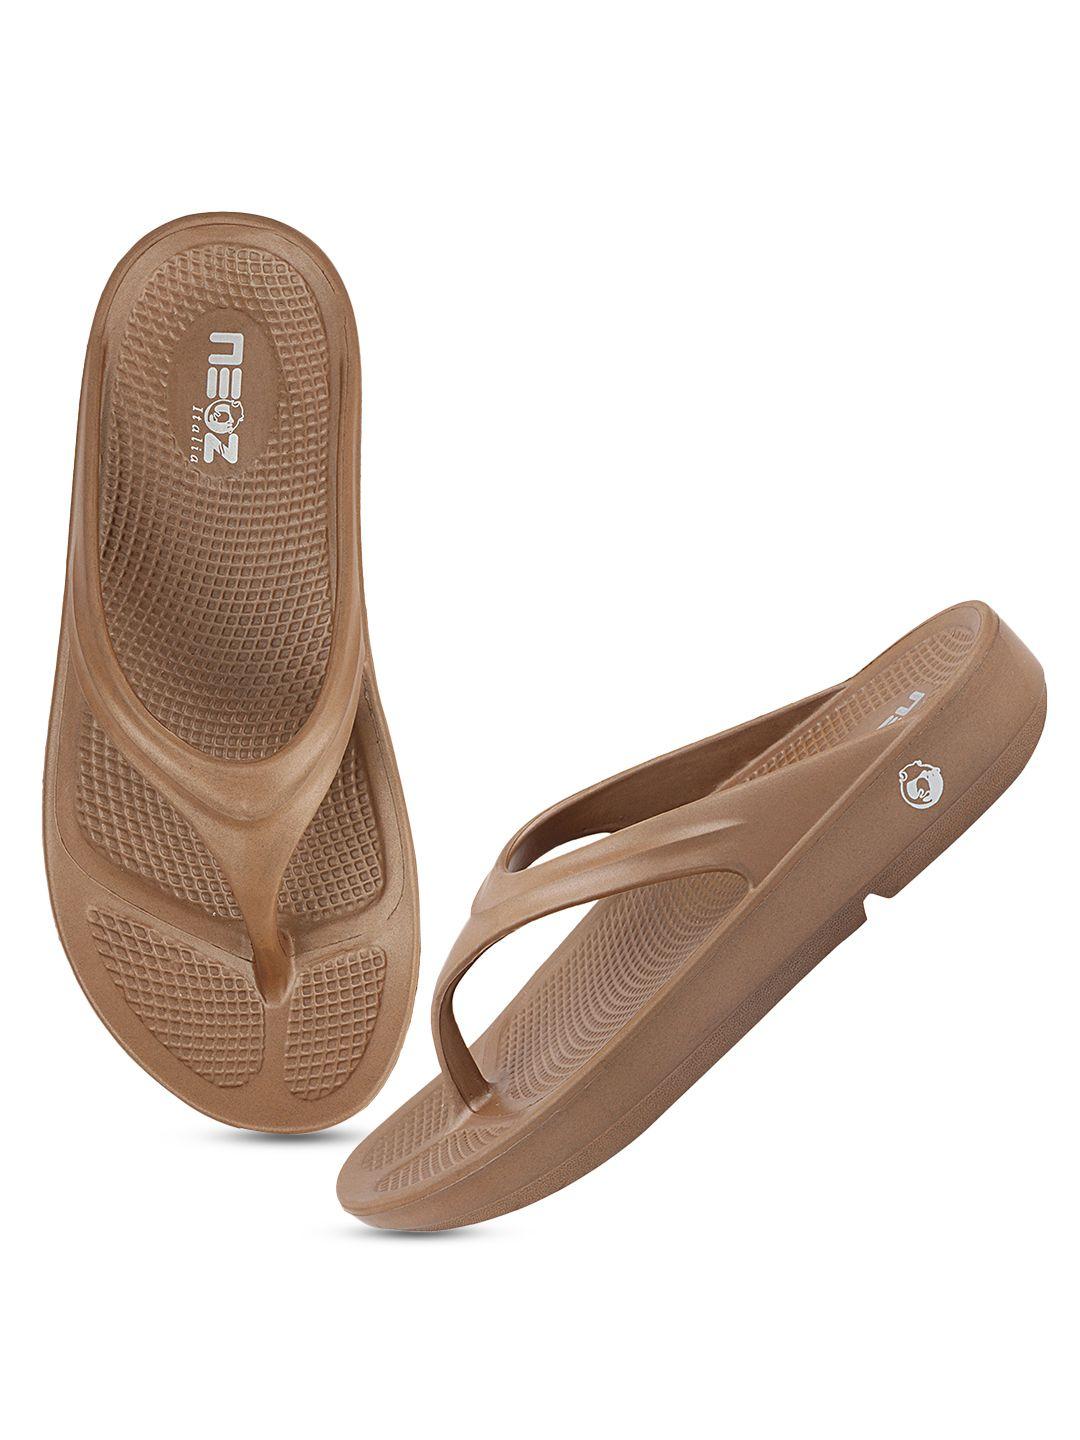 neoz women bronze-toned rubber thong flip-flops